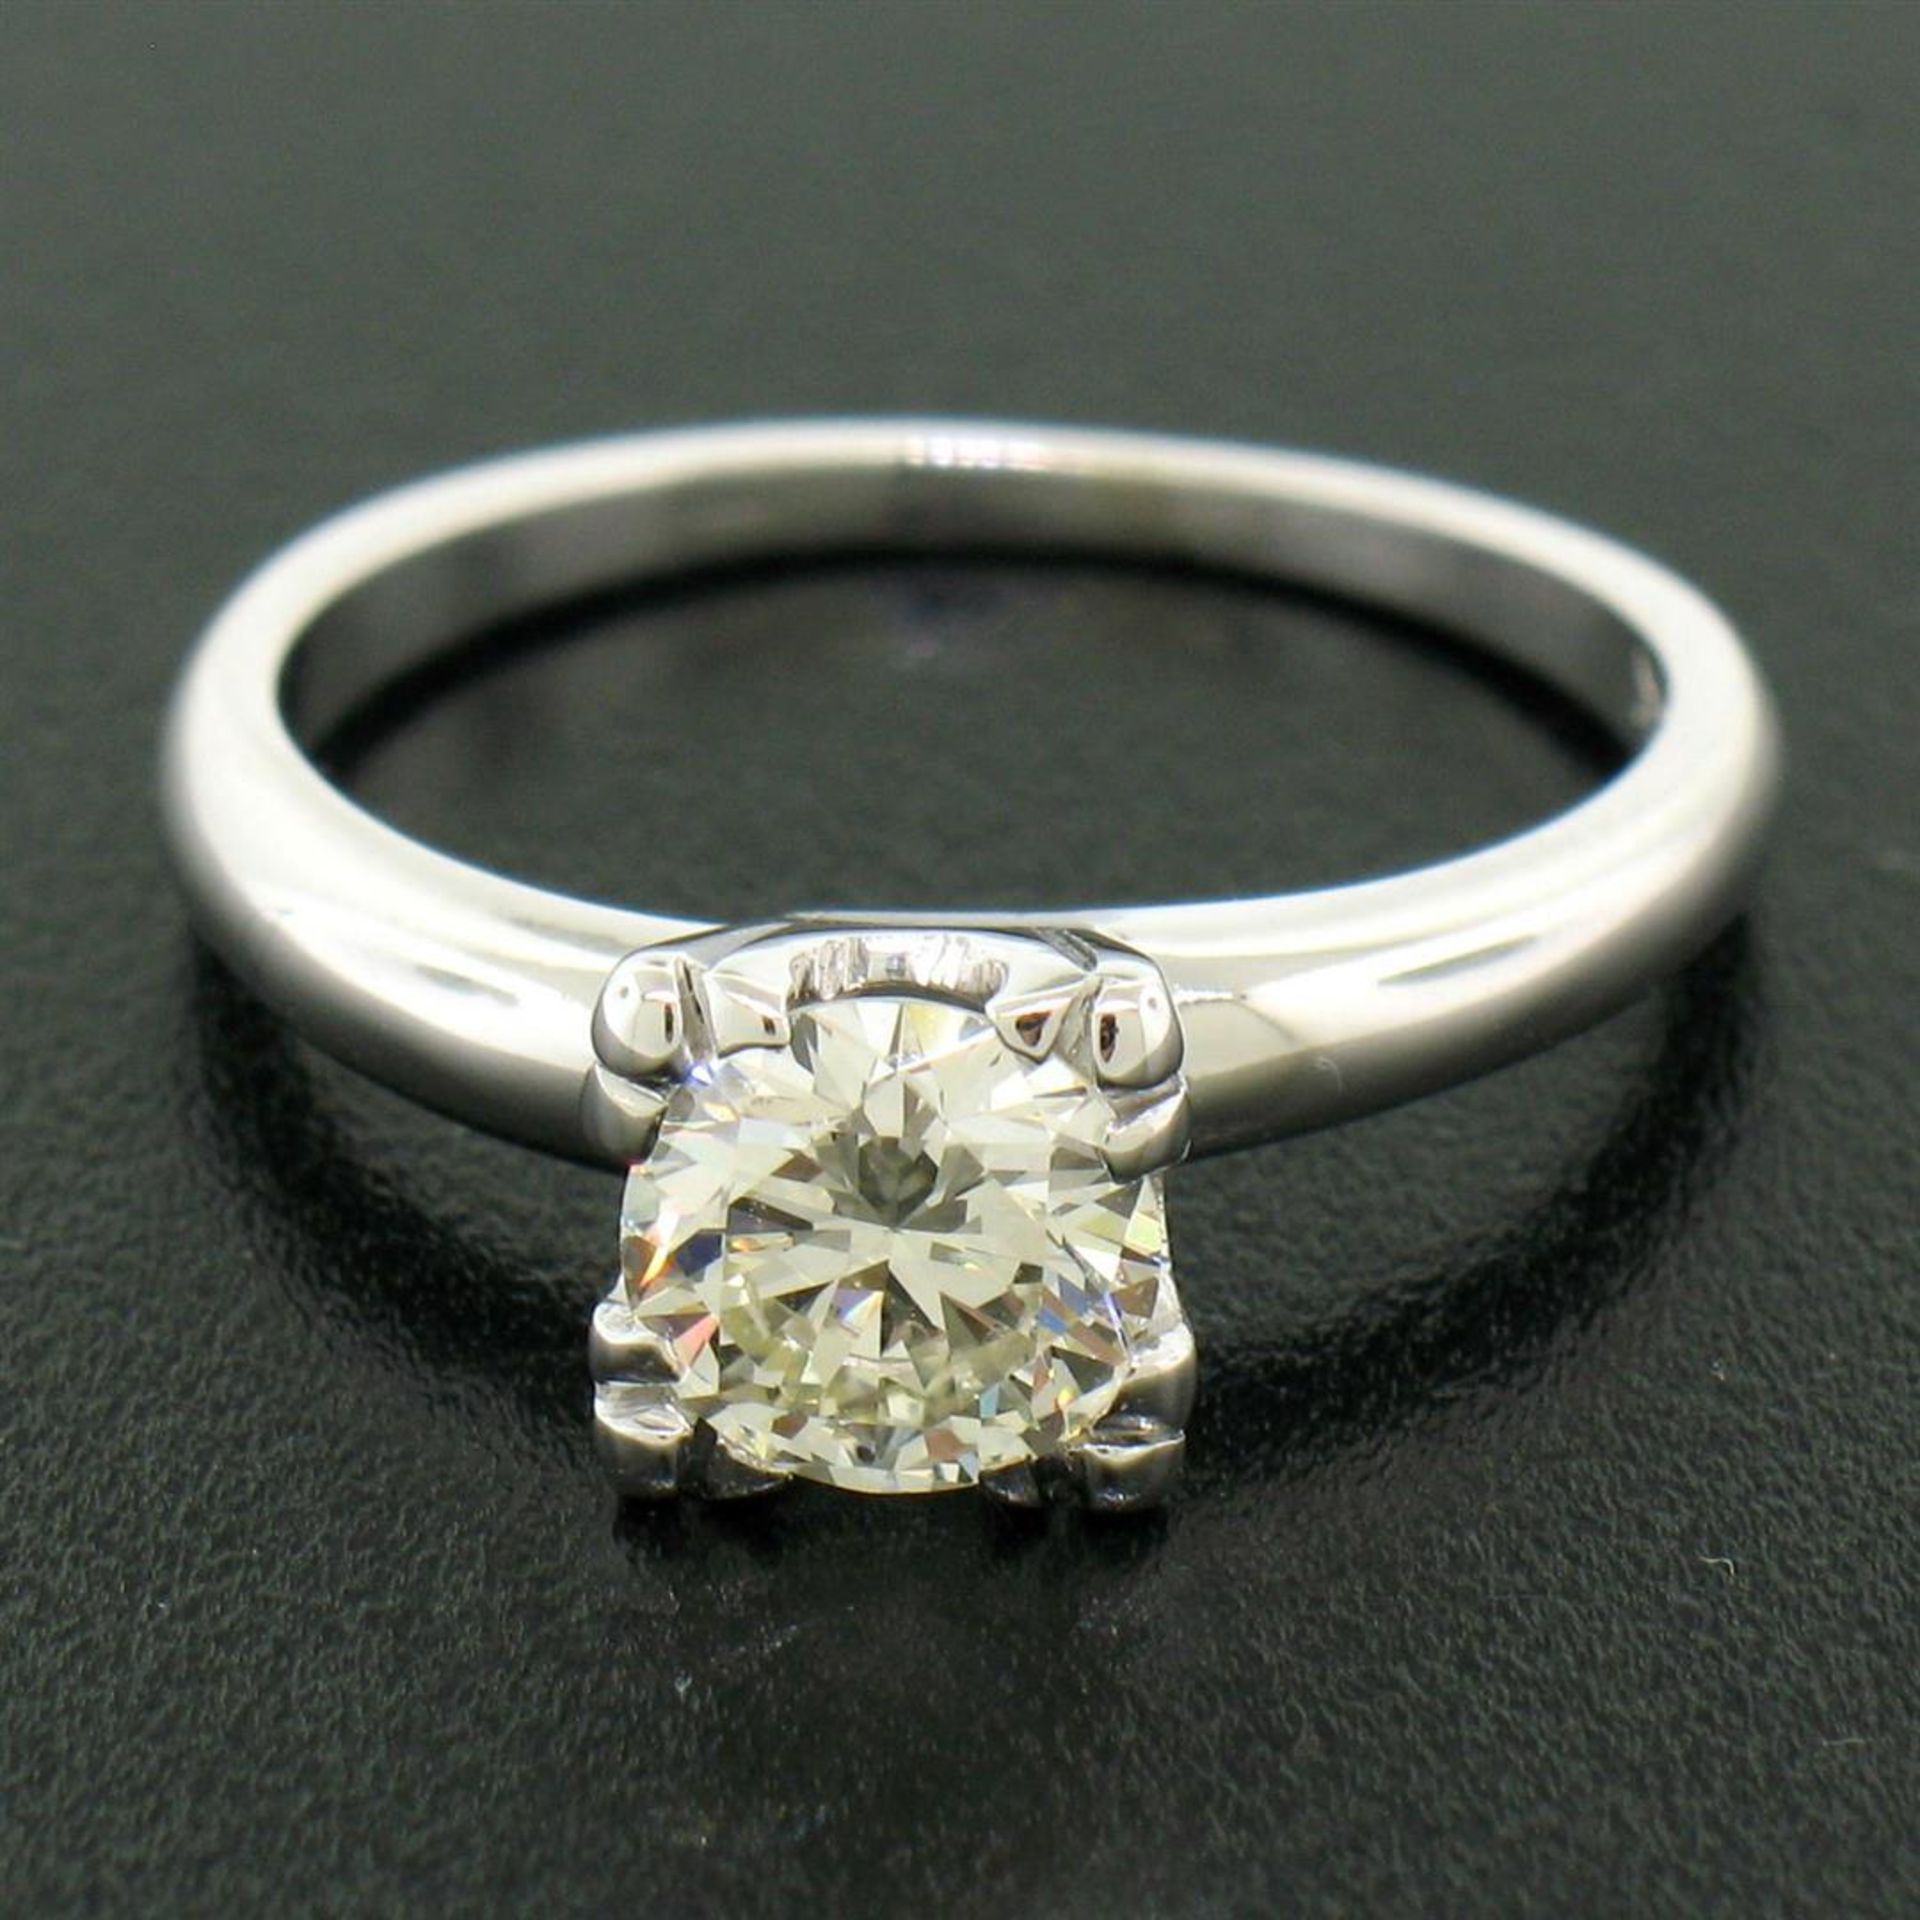 14k White Gold 0.83 ctw I VVS2 Round Brilliant Cut Diamond Solitaire Ring - Image 2 of 7